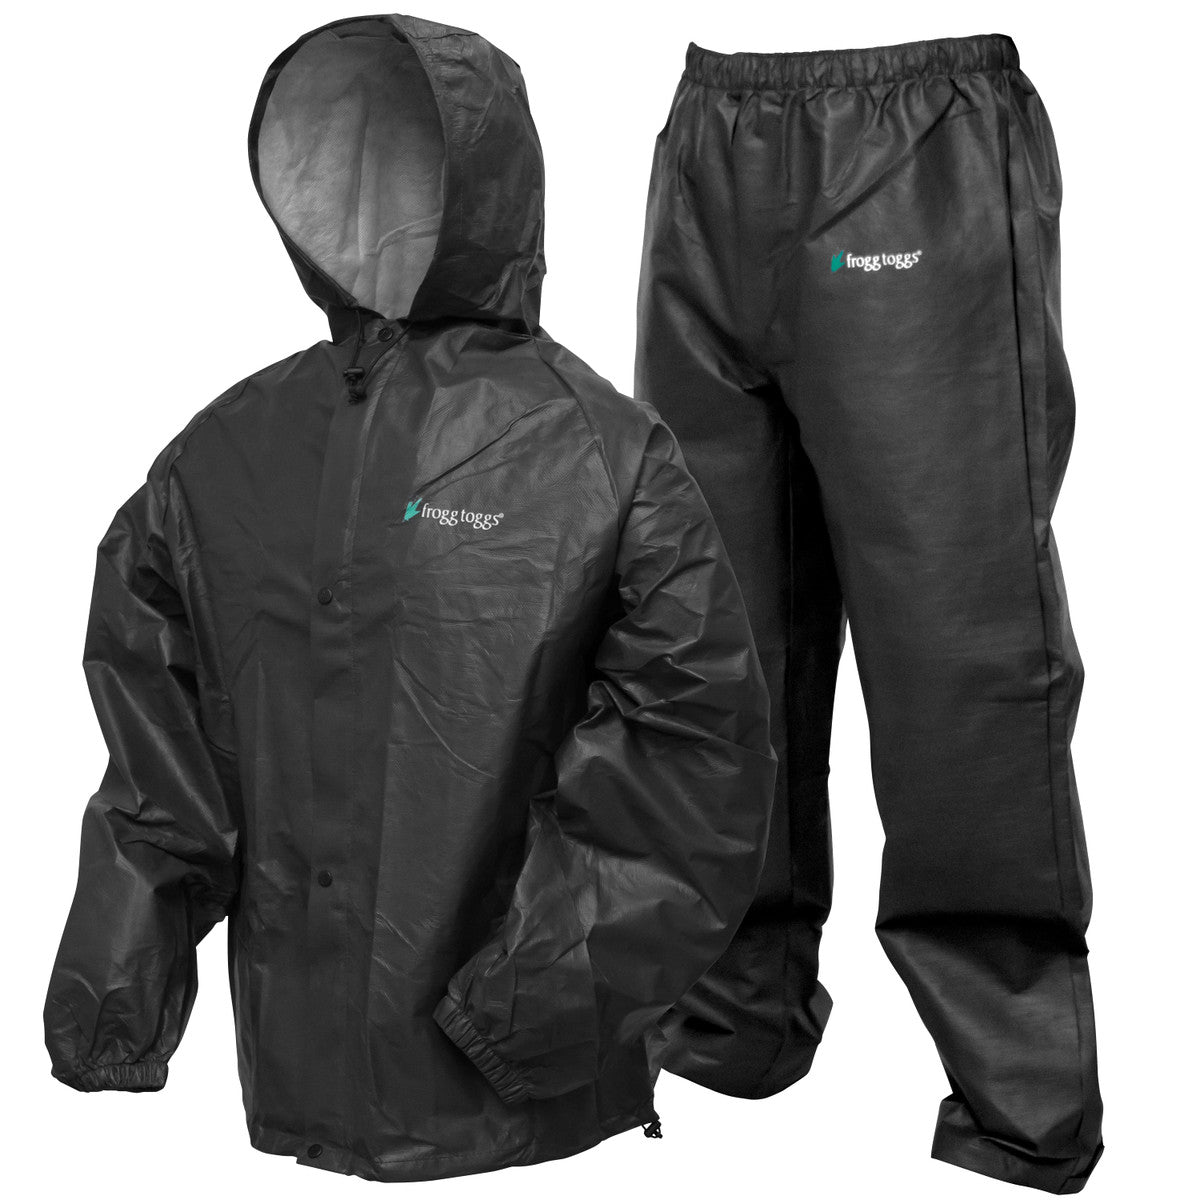 Frogg Toggs Pro Lite Rain Suit - Black